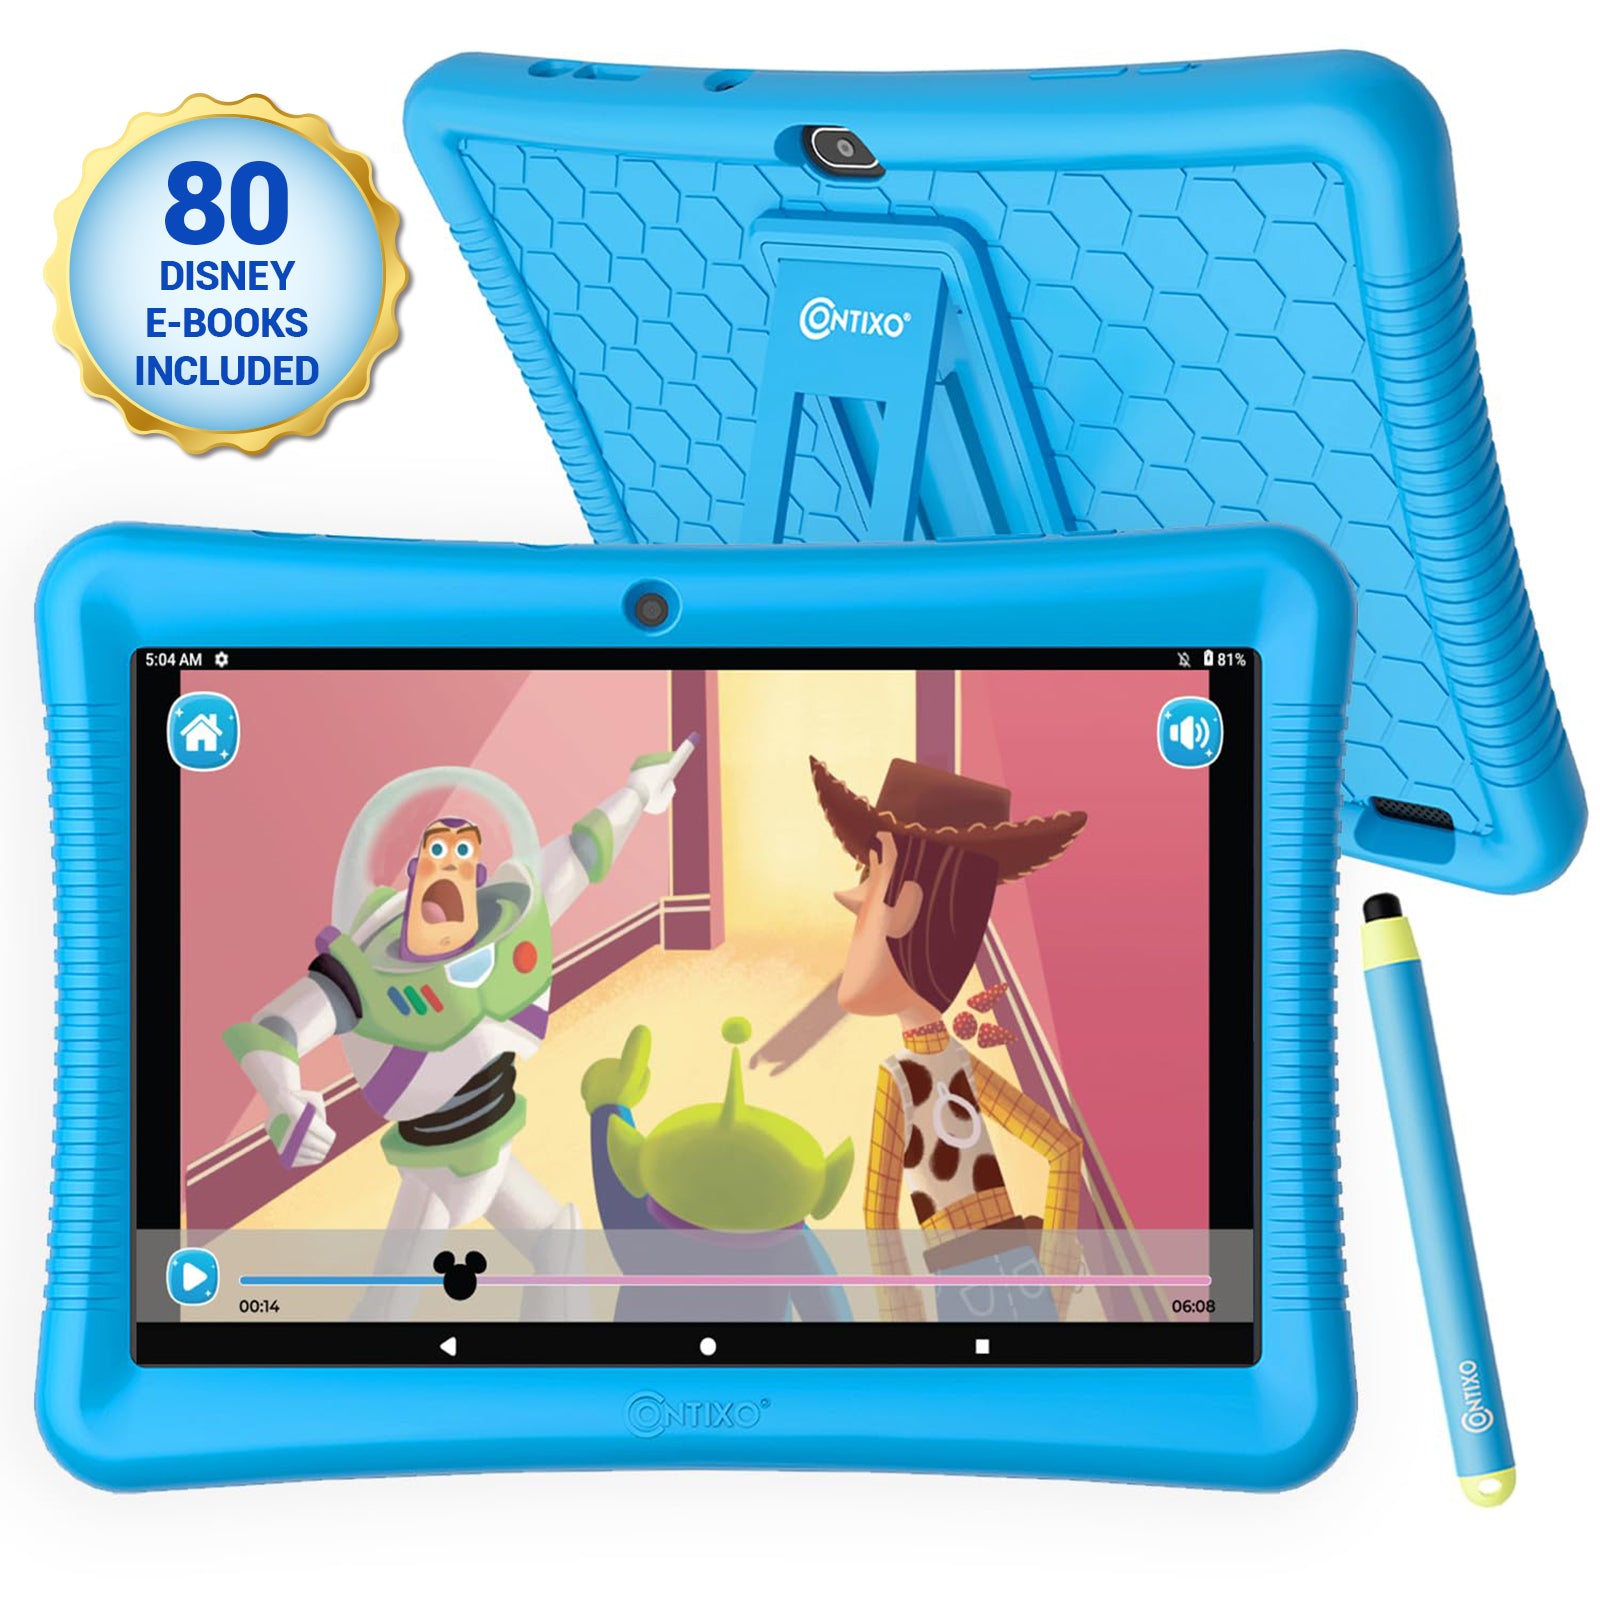 Contixo K3-Pink K3 7-Inch Kids HD Tablet (Pink)